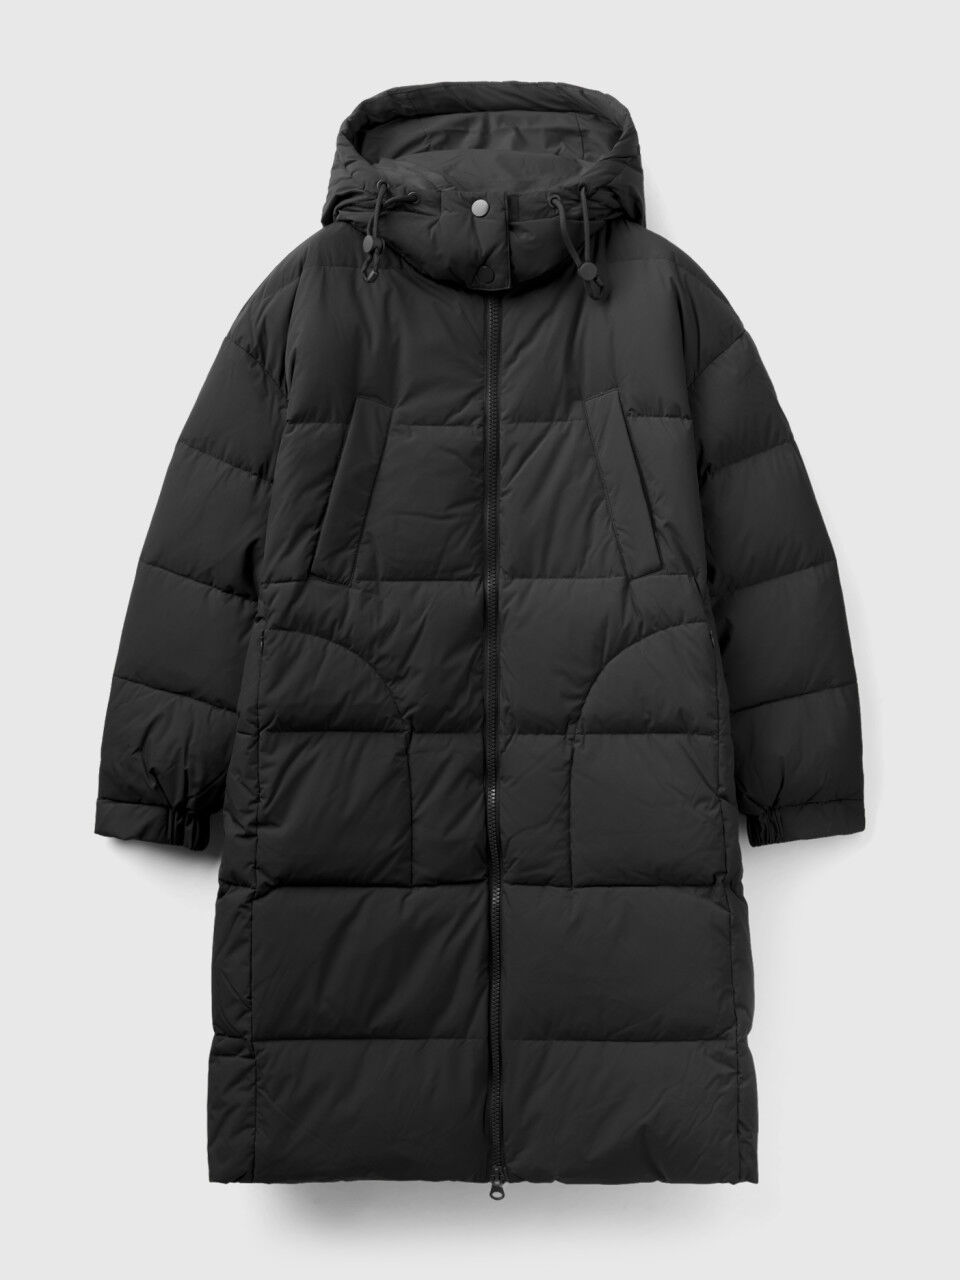 Black puffer jacket with hood - Black | Benetton